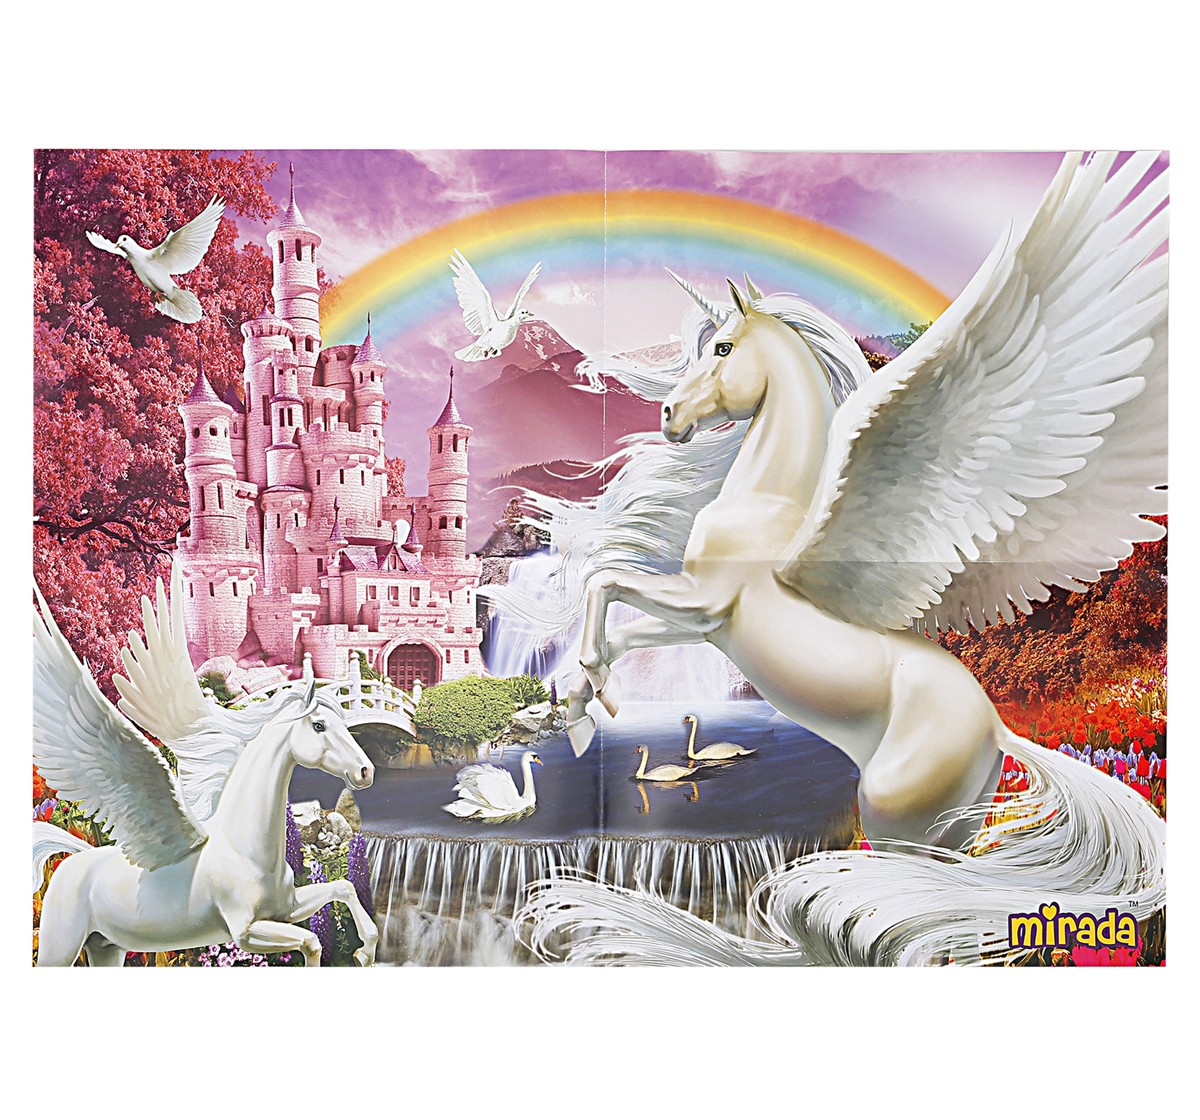 Mirada Mystical Unicorn Fantasy Puzzle Game for Kids 5Y+, Multicolour